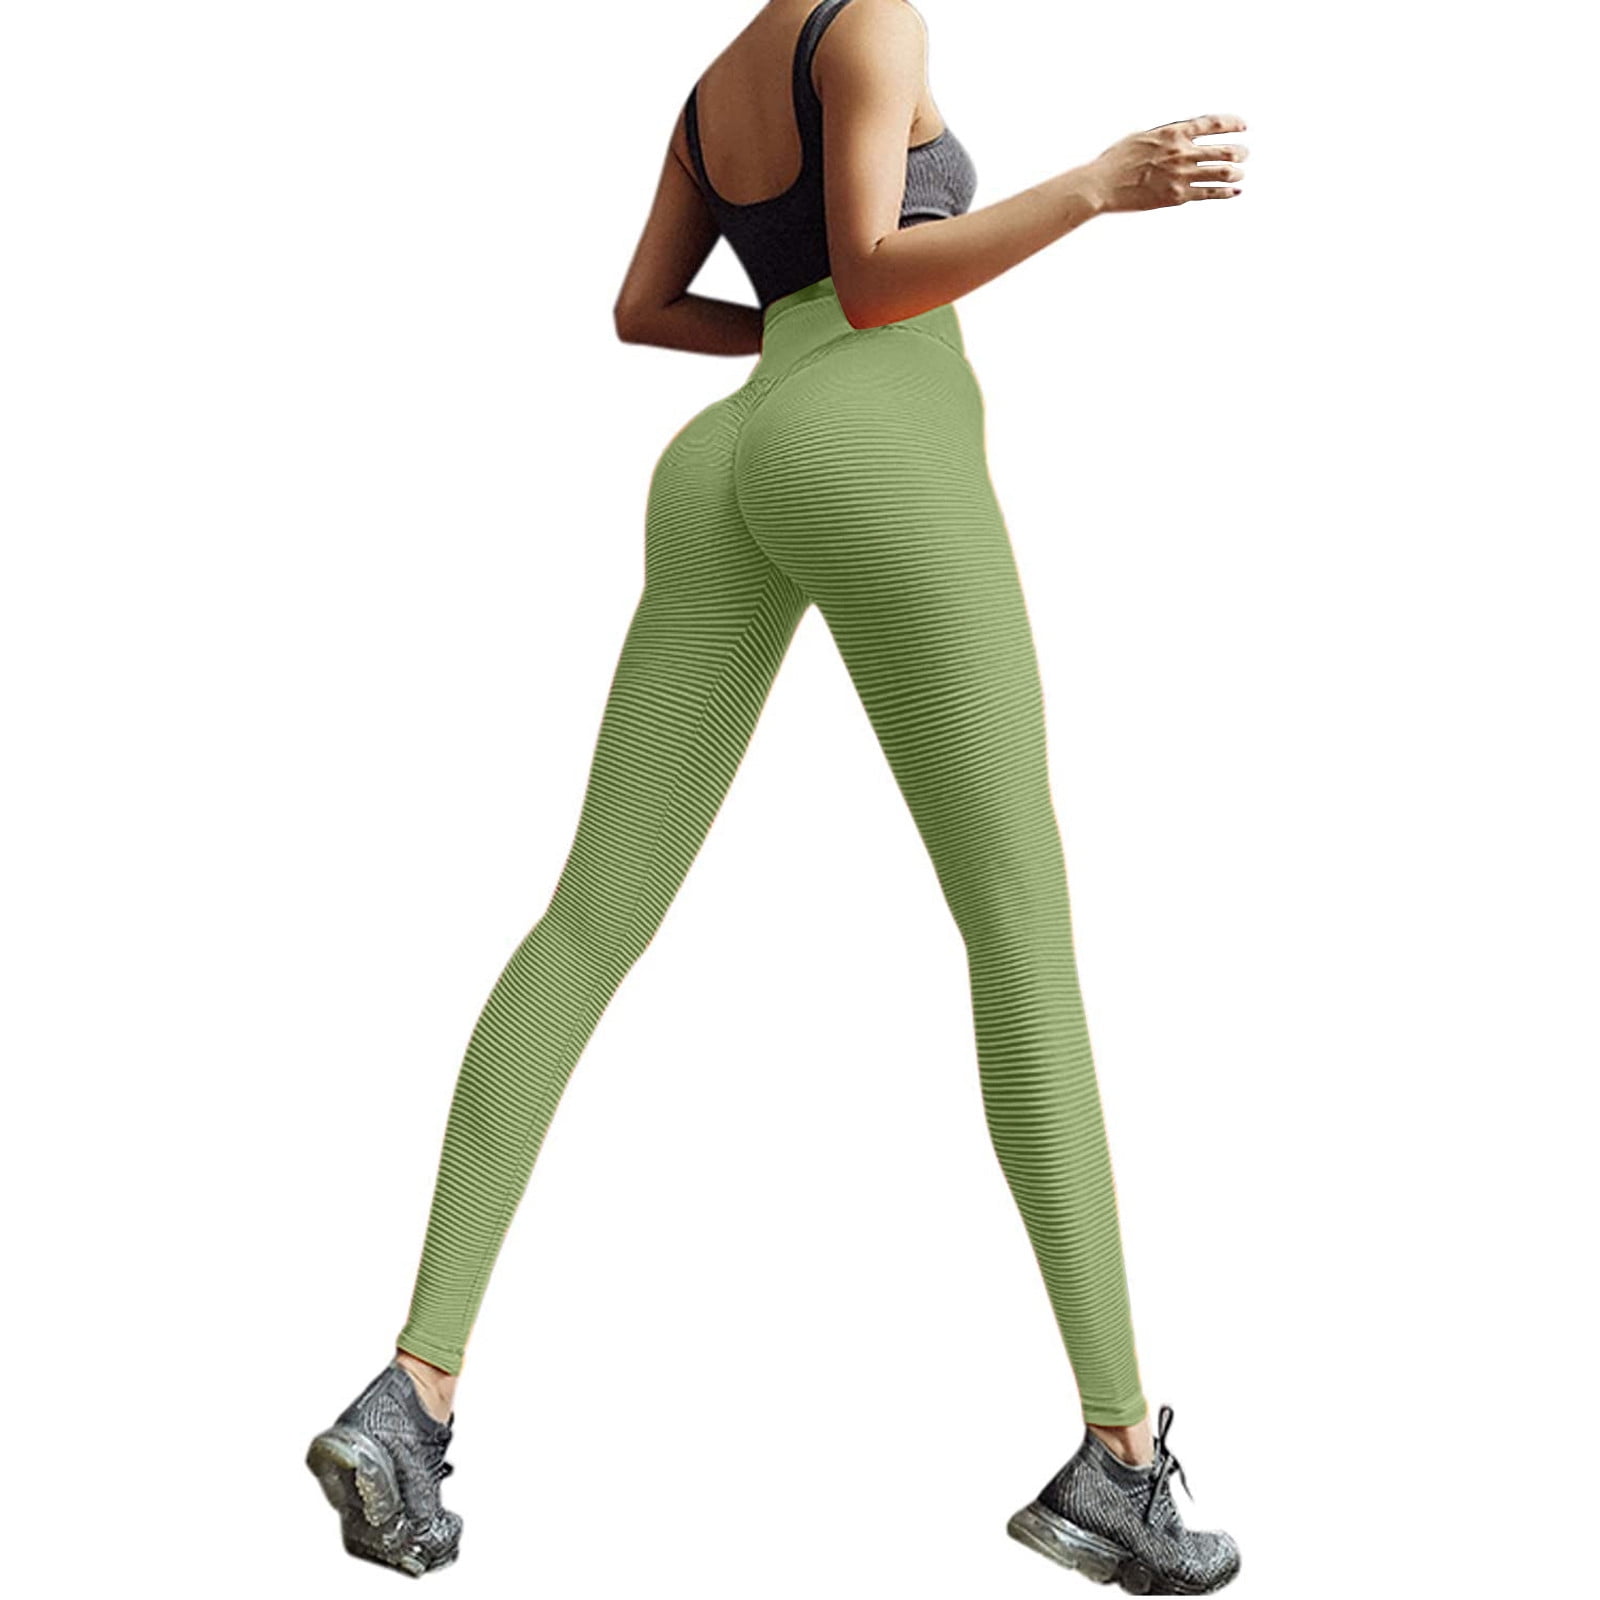 LWZWM Workout Legging 3D Printed Butt Lifting Yoga Pants for Women Teens  Girls Sports Drawstring High Waist Stretch Stretchy Fitness Leggings Yoga